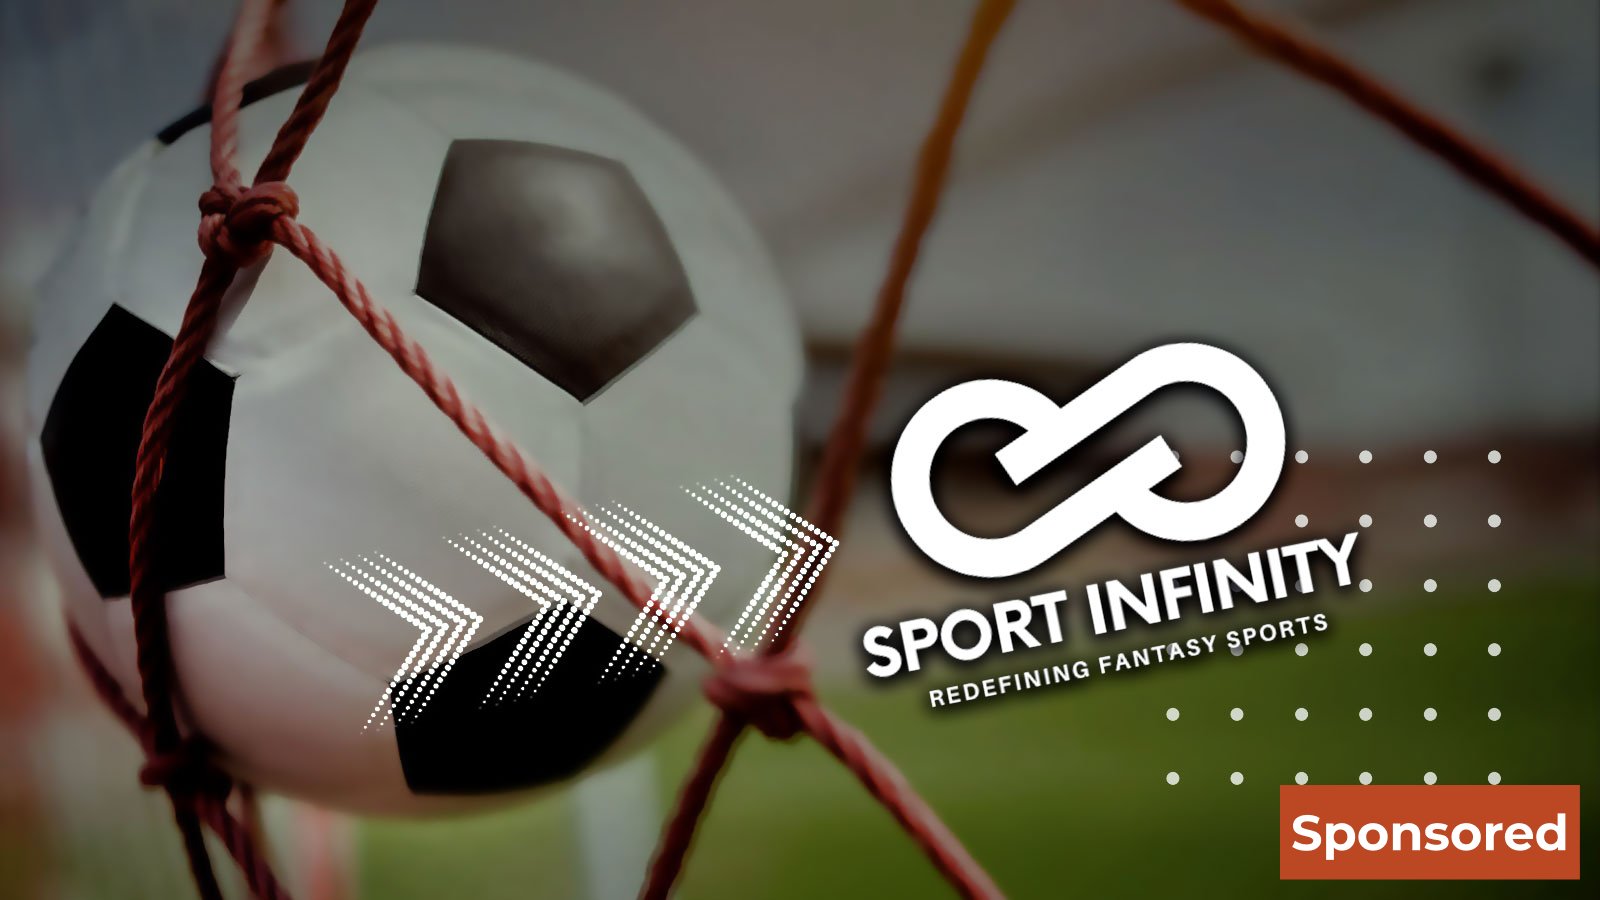 Infinity Sport Logo